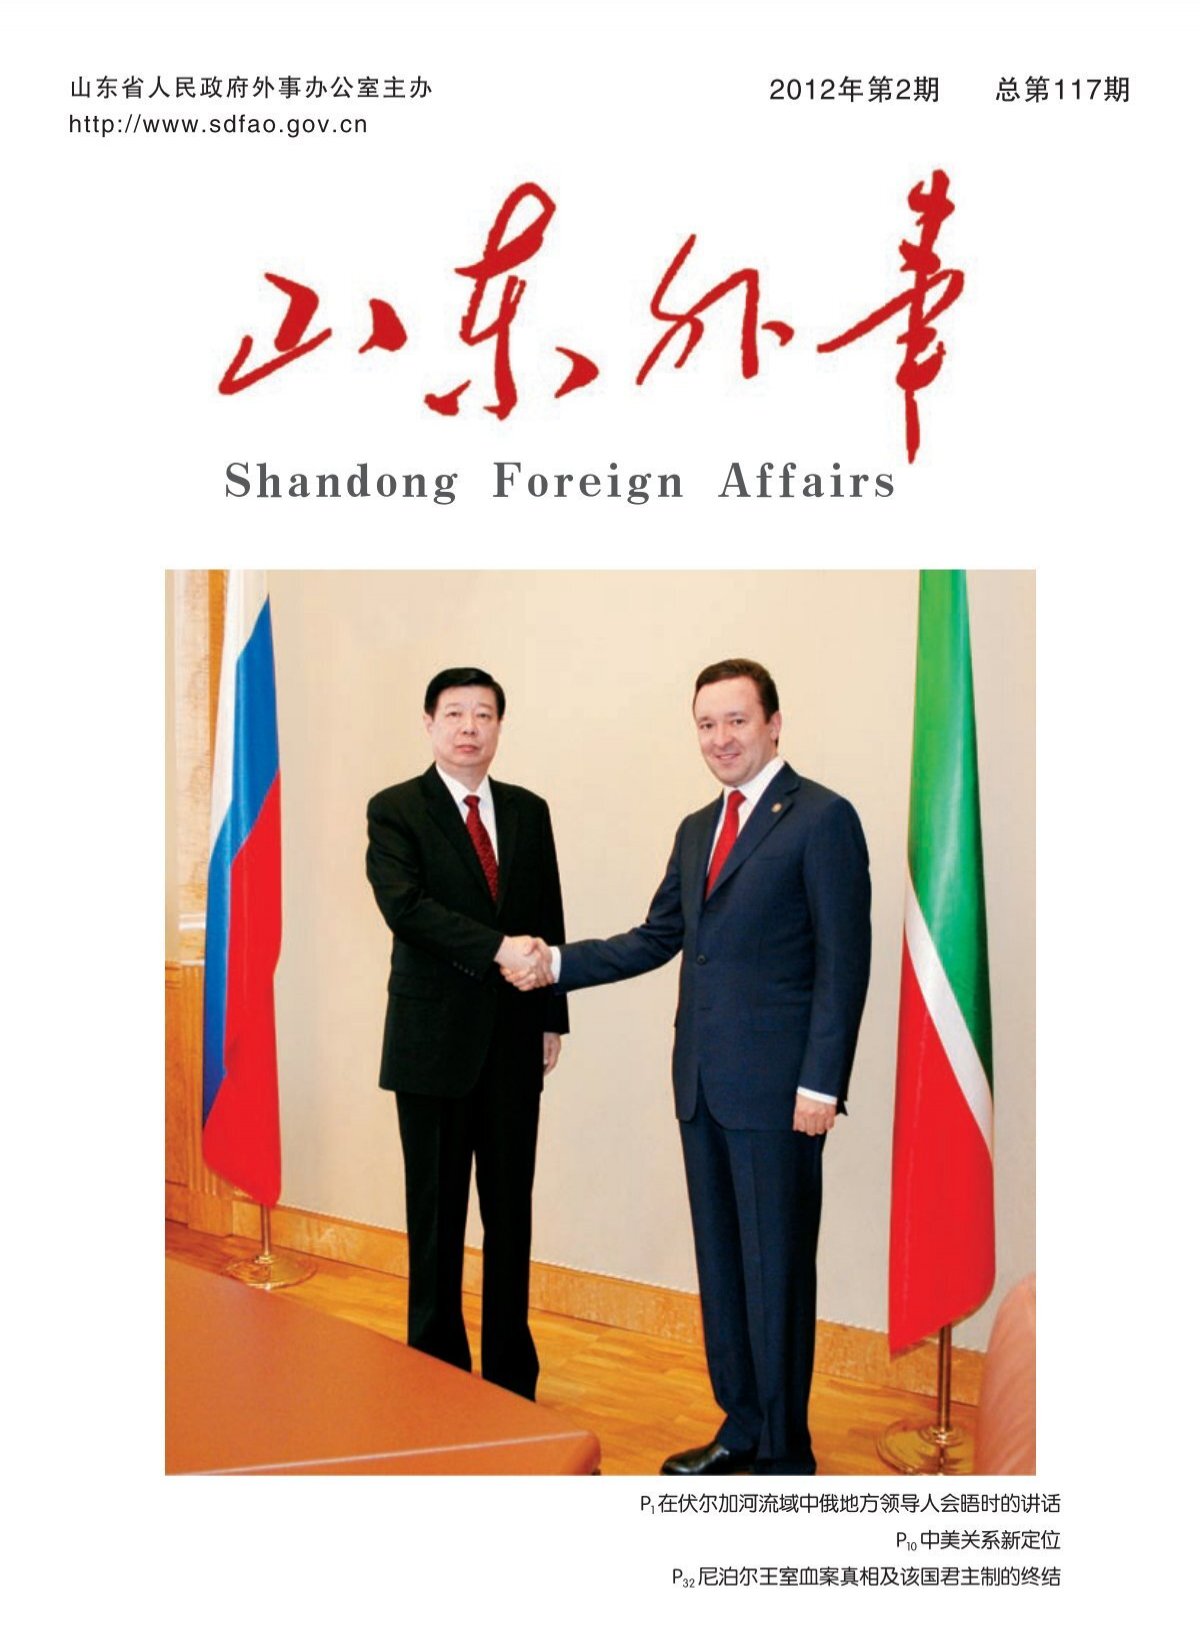 Shandong Foreign Affairs - 山东省外事信息网